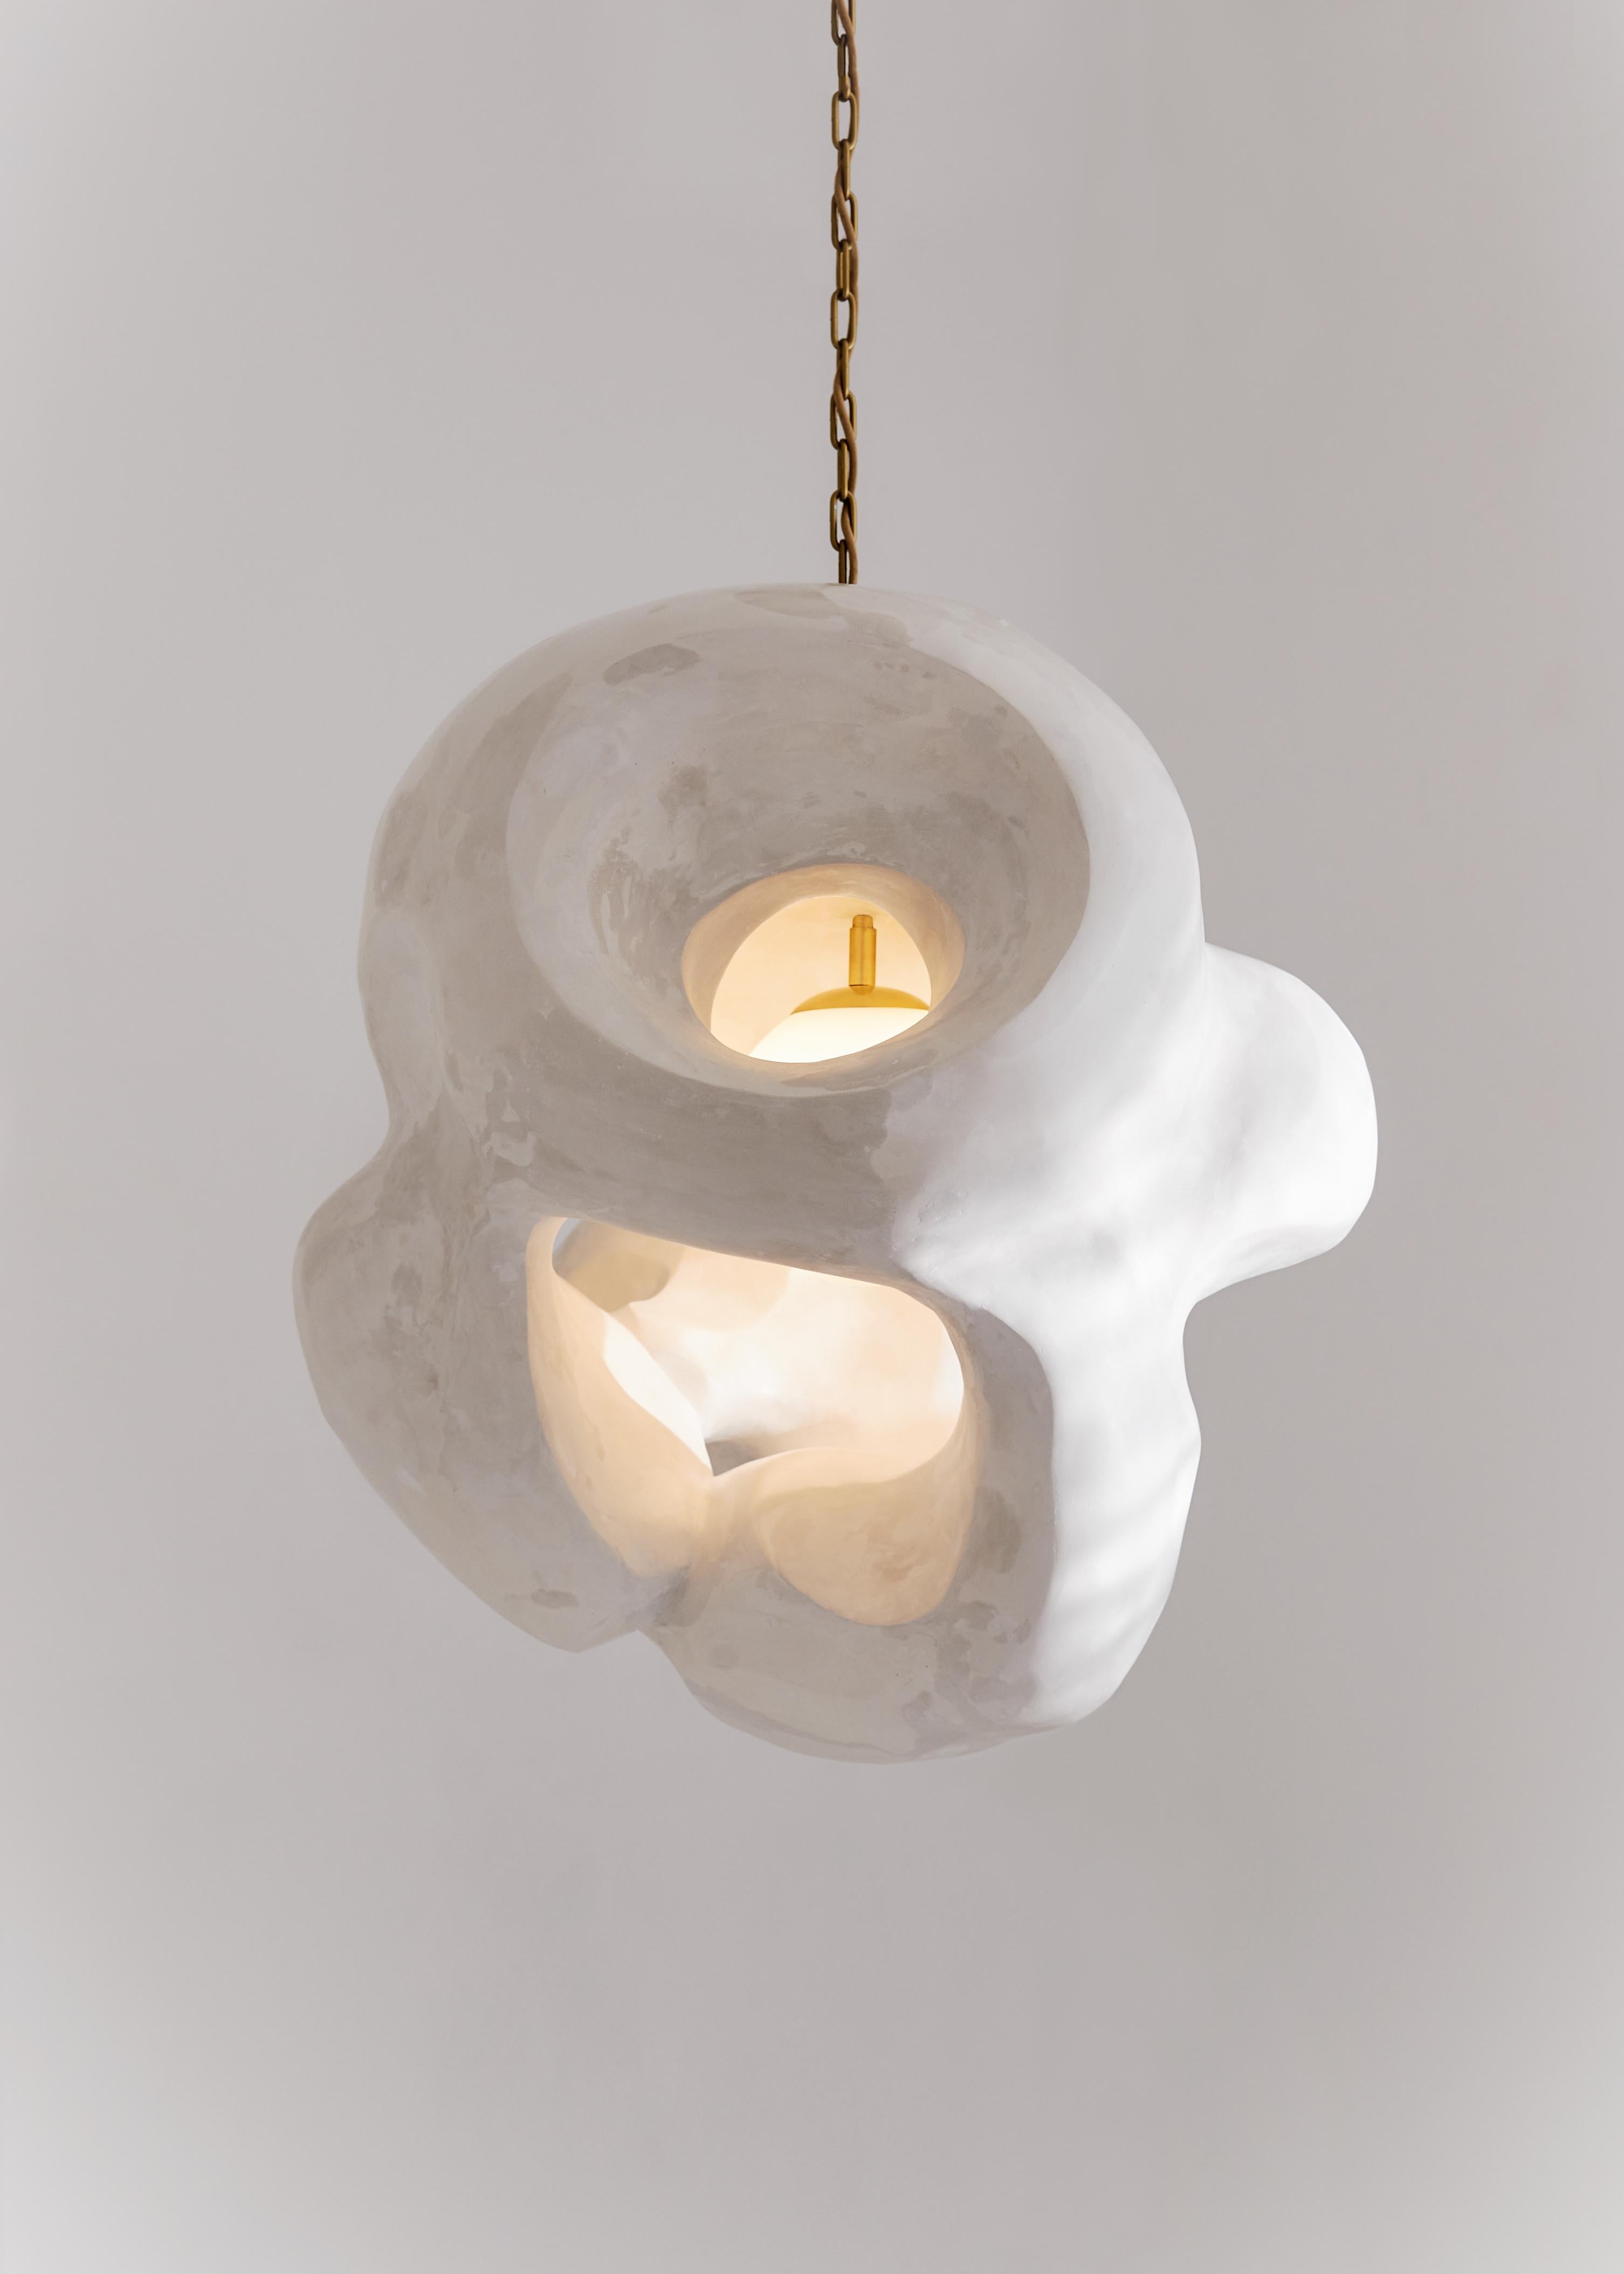 Large Contemporary Pendant Light, Sculptural Collectible Design 